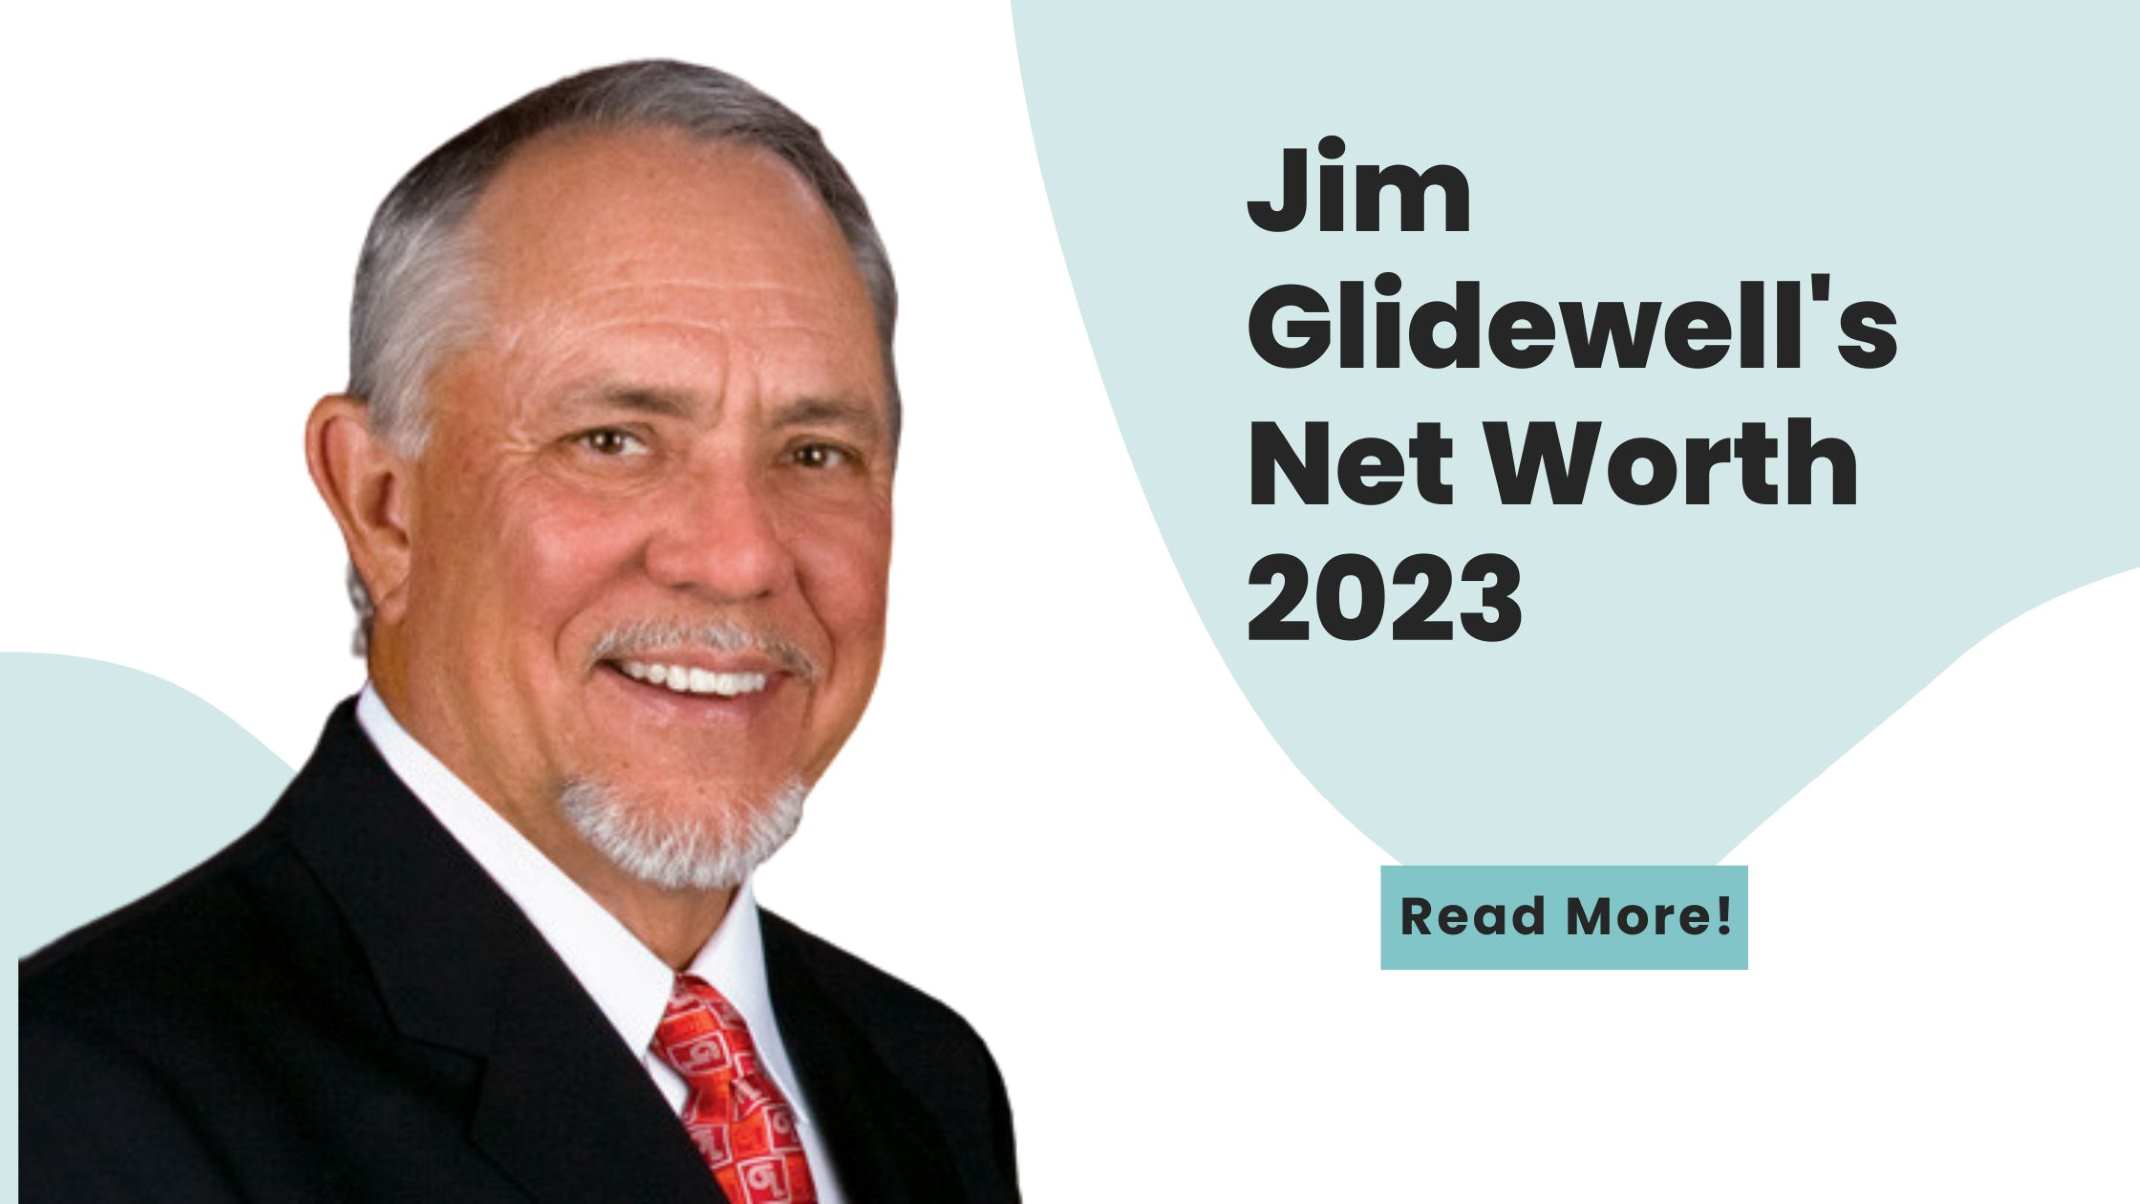 Jim Glidewell's Net Worth 2023